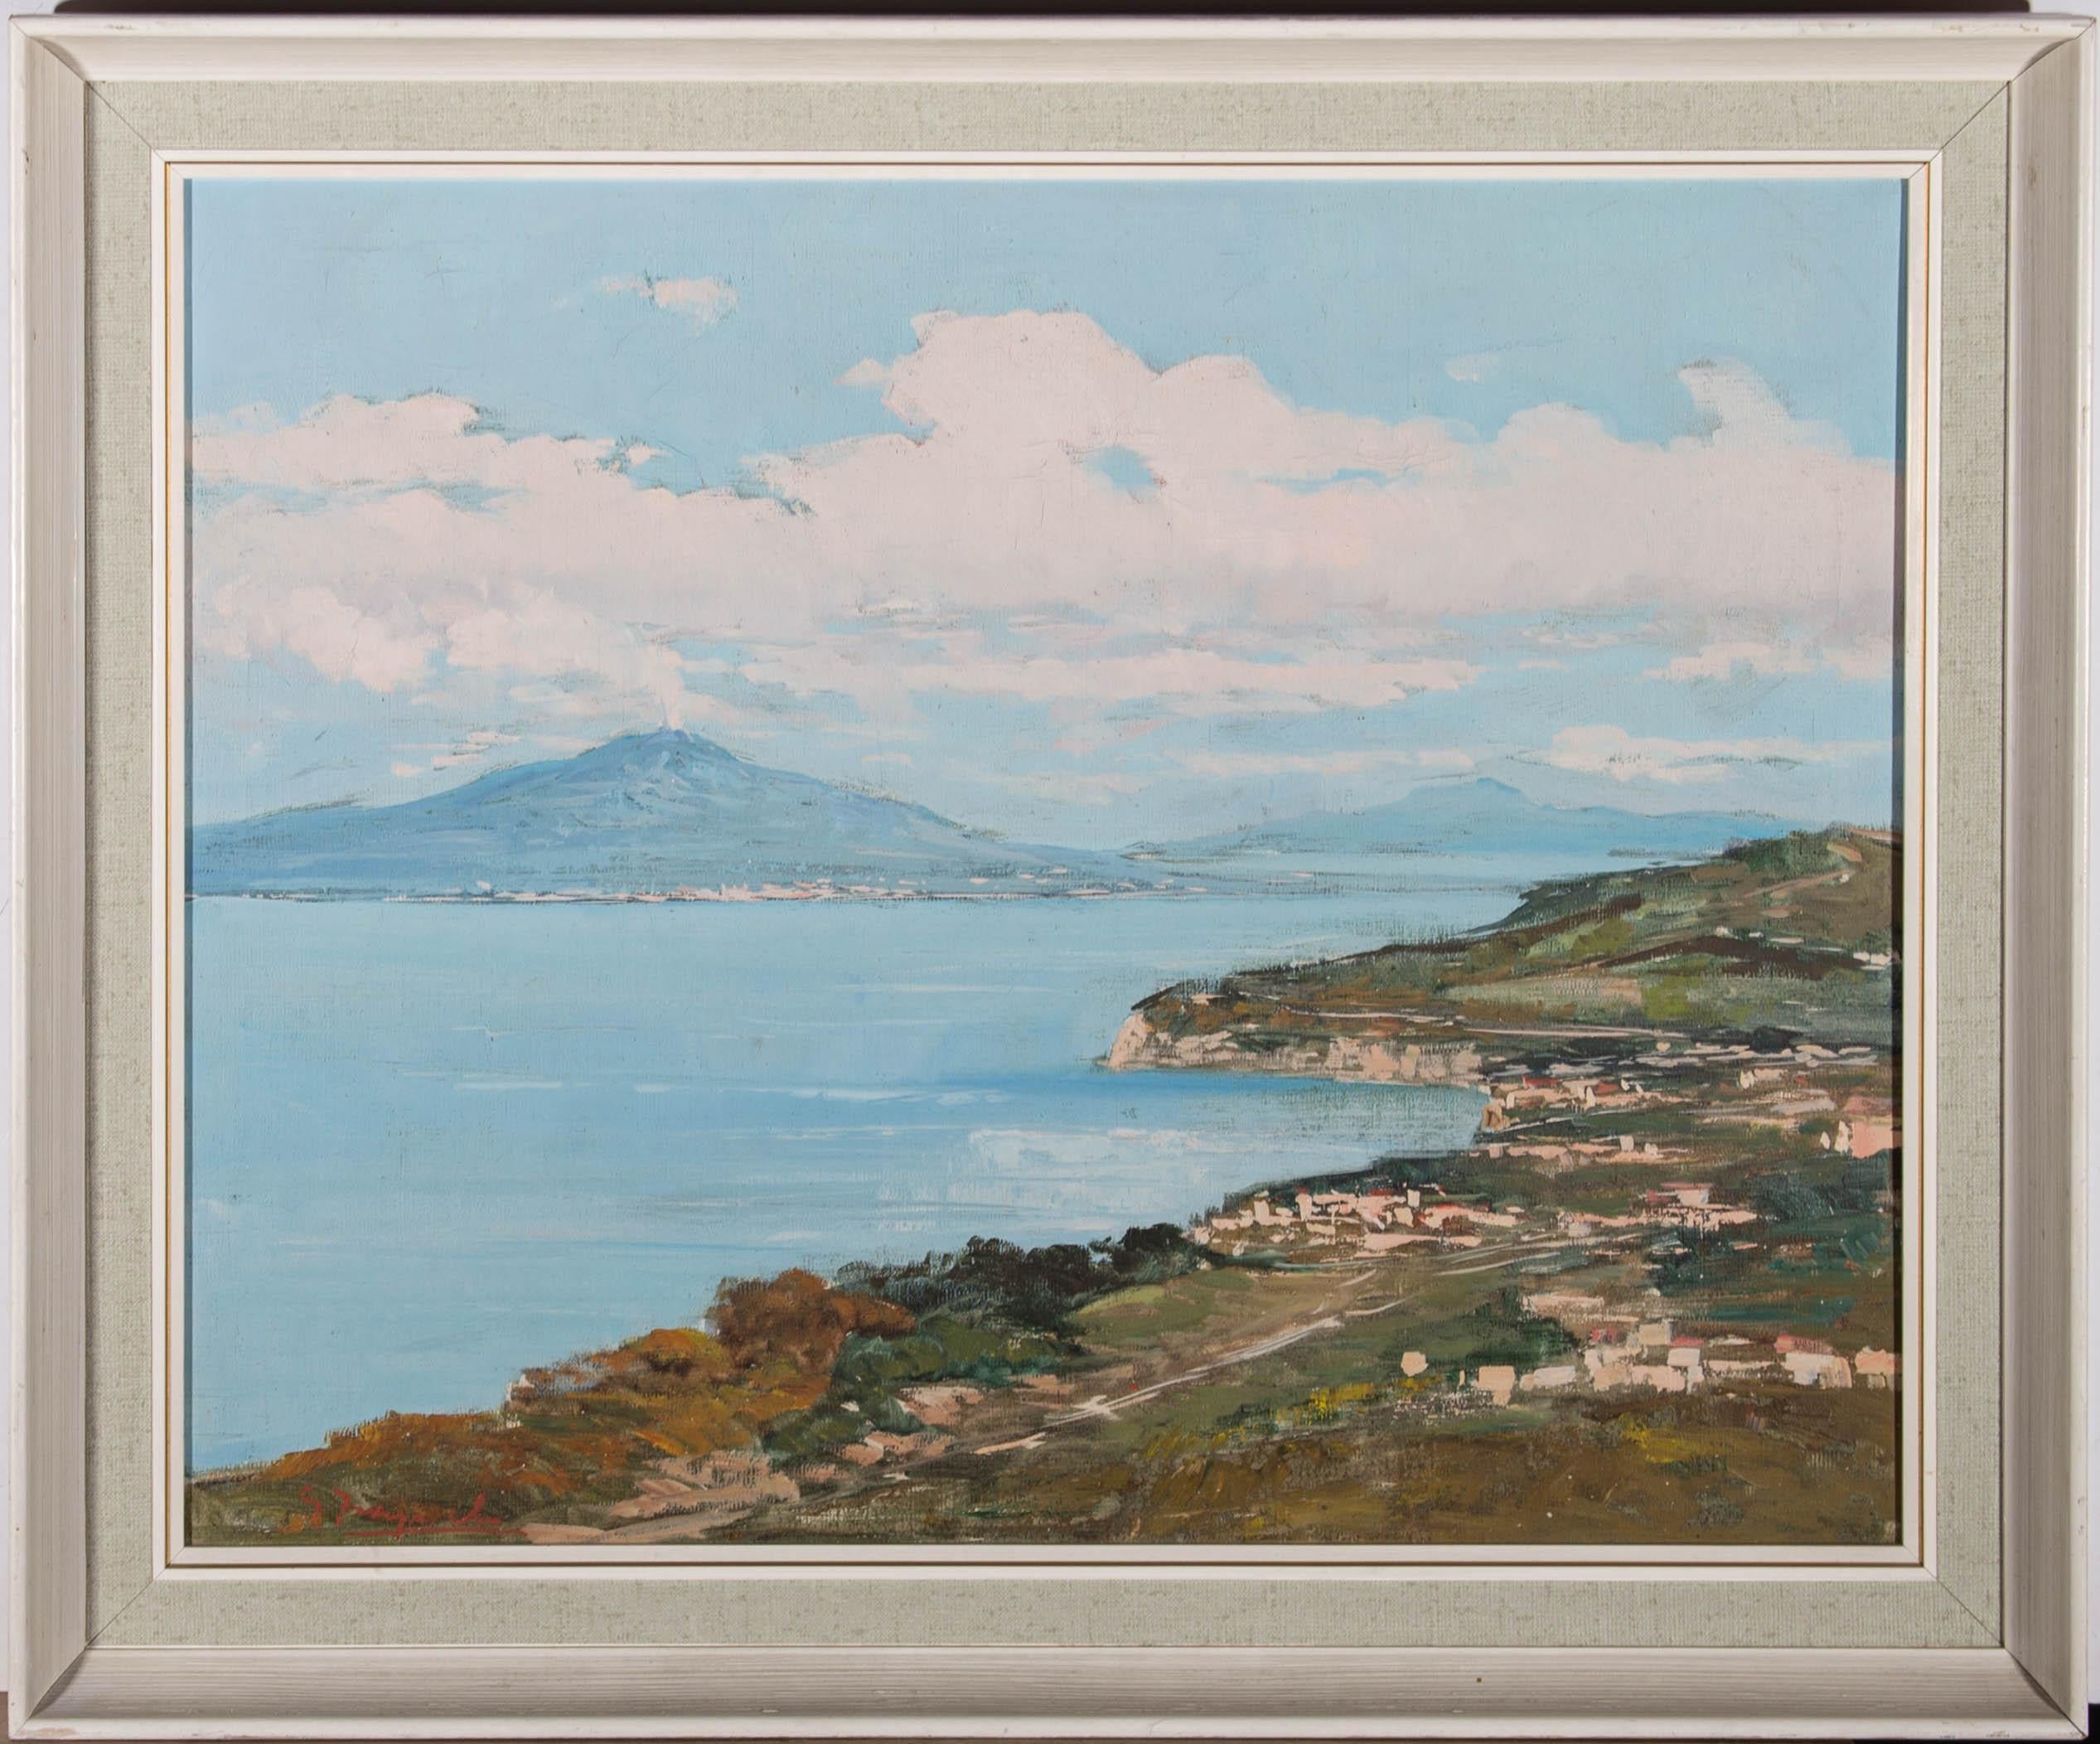 Unknown Landscape Painting - 20th Century Oil - Distant Mount Vesuvius